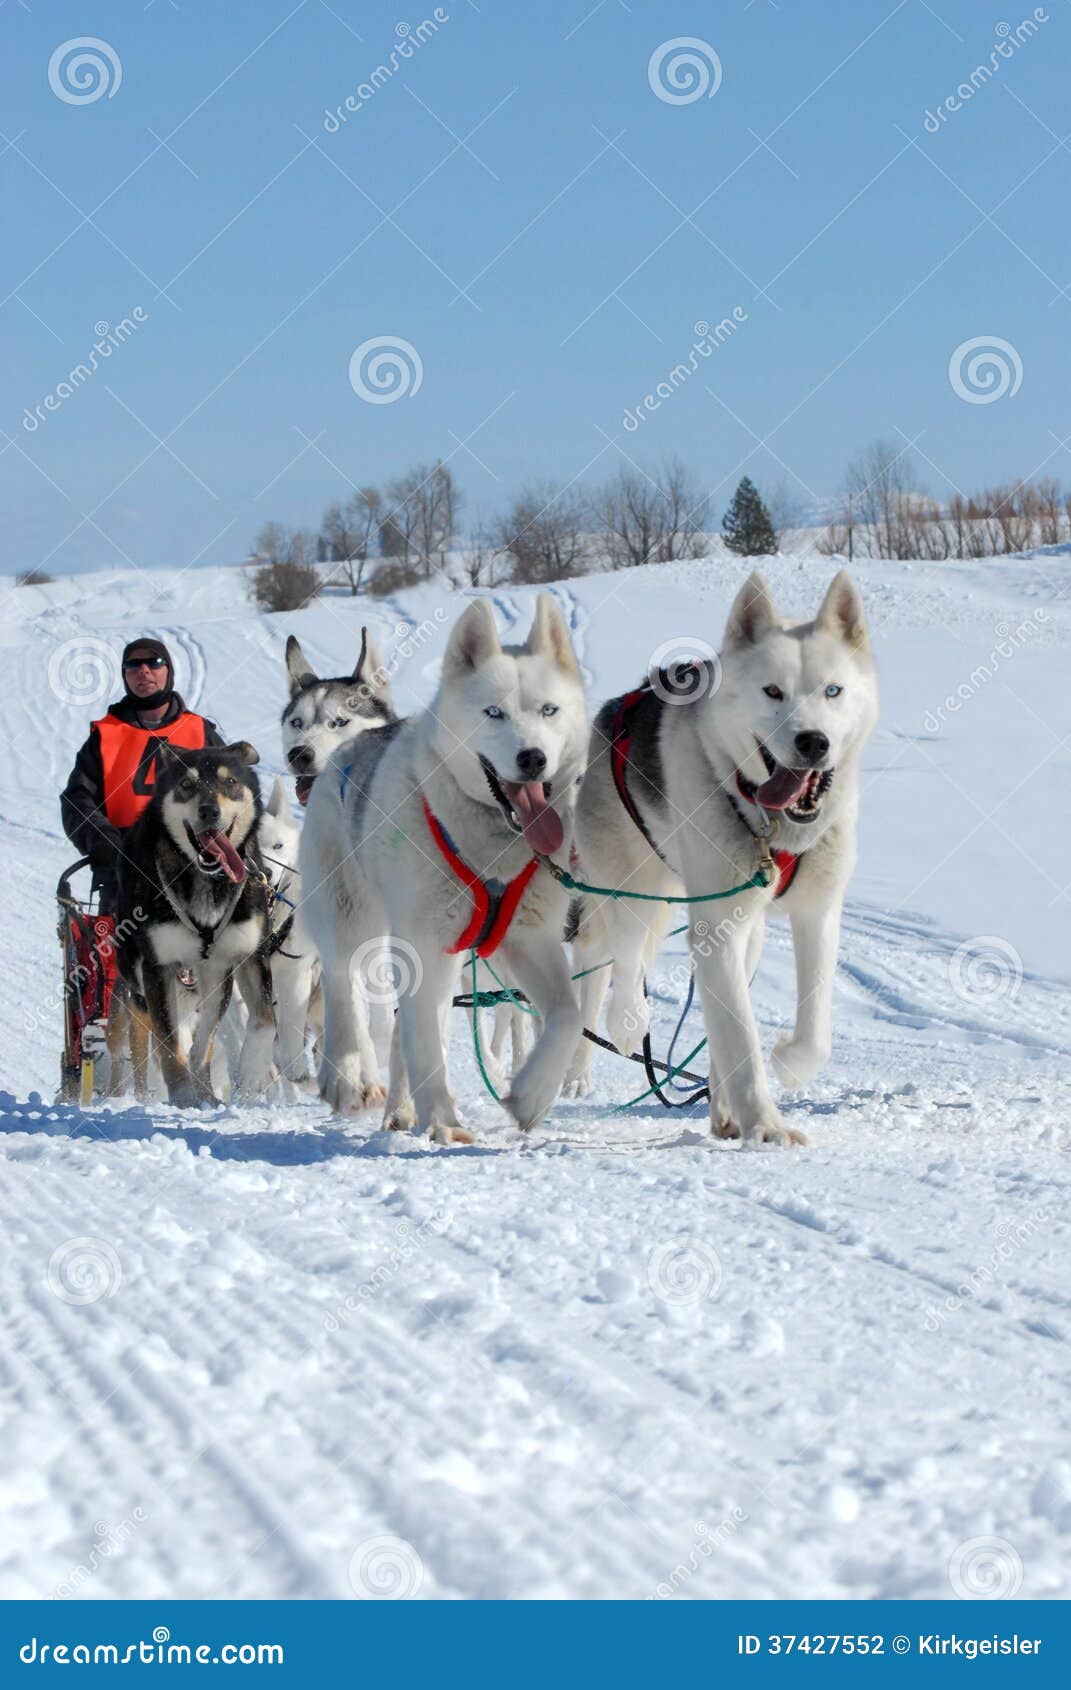 free clipart dog sled team - photo #46